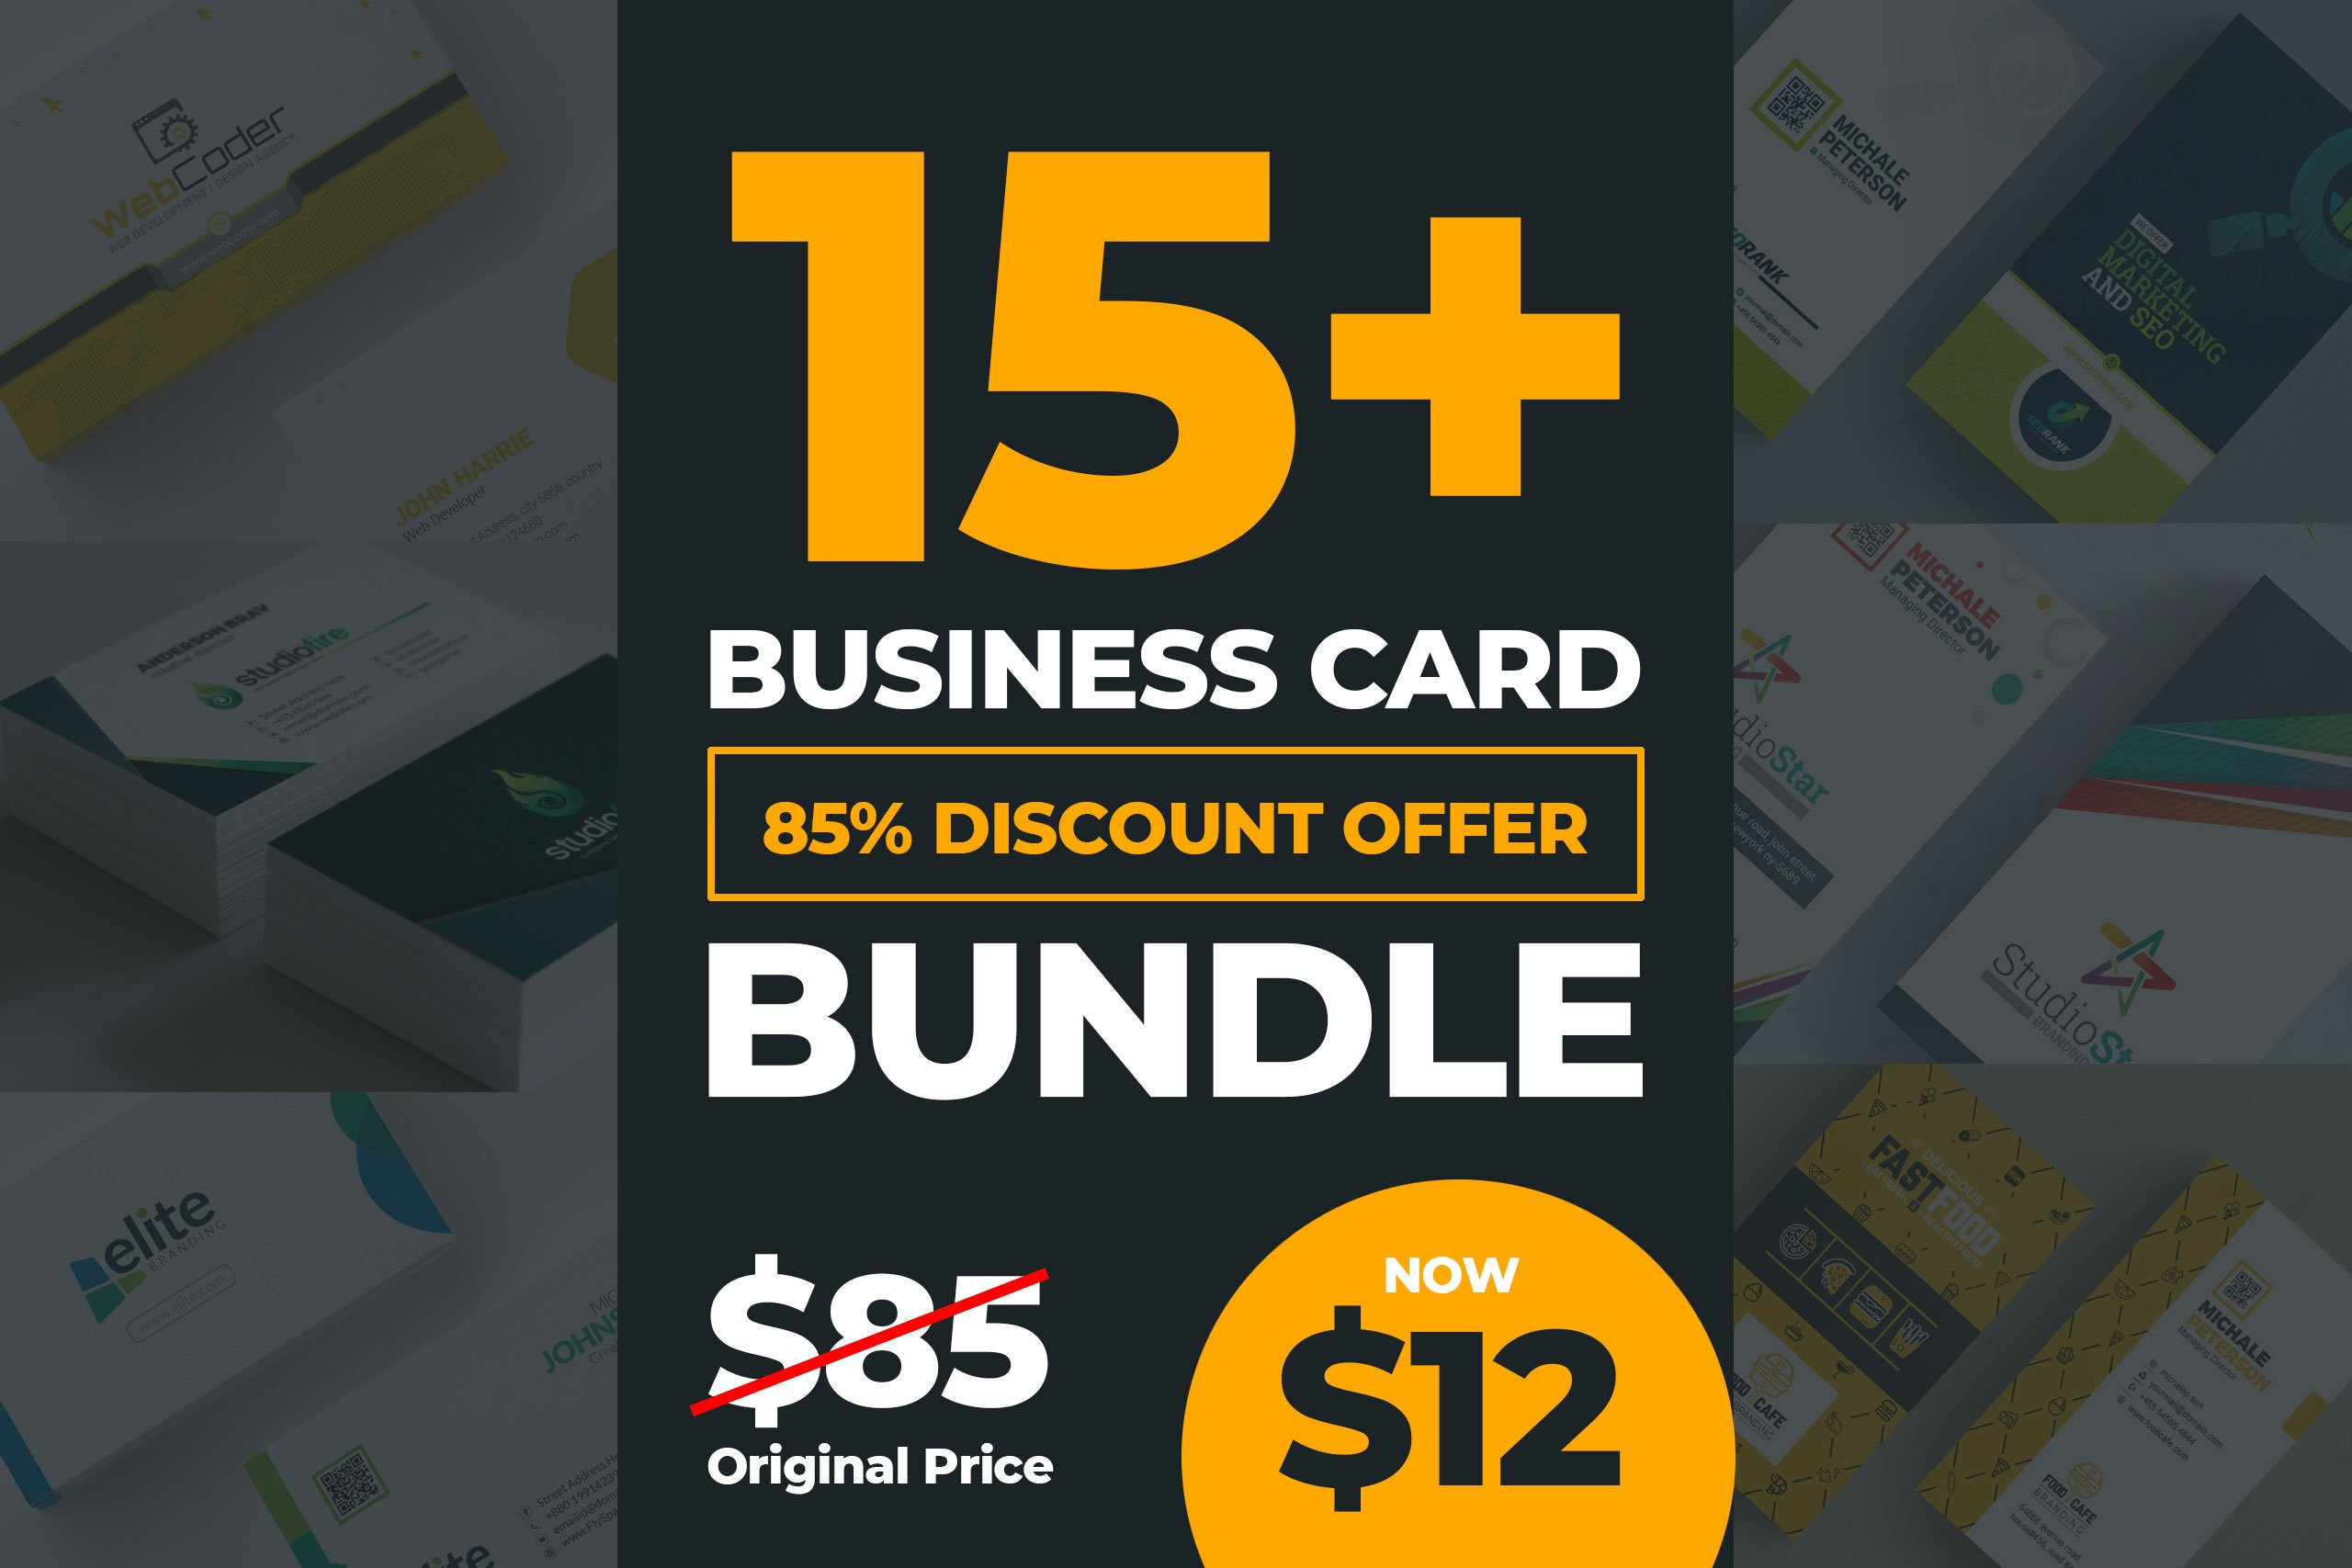 Business Card Template Bundle Business Card Templates Of Free Business Card Templates In Psd format